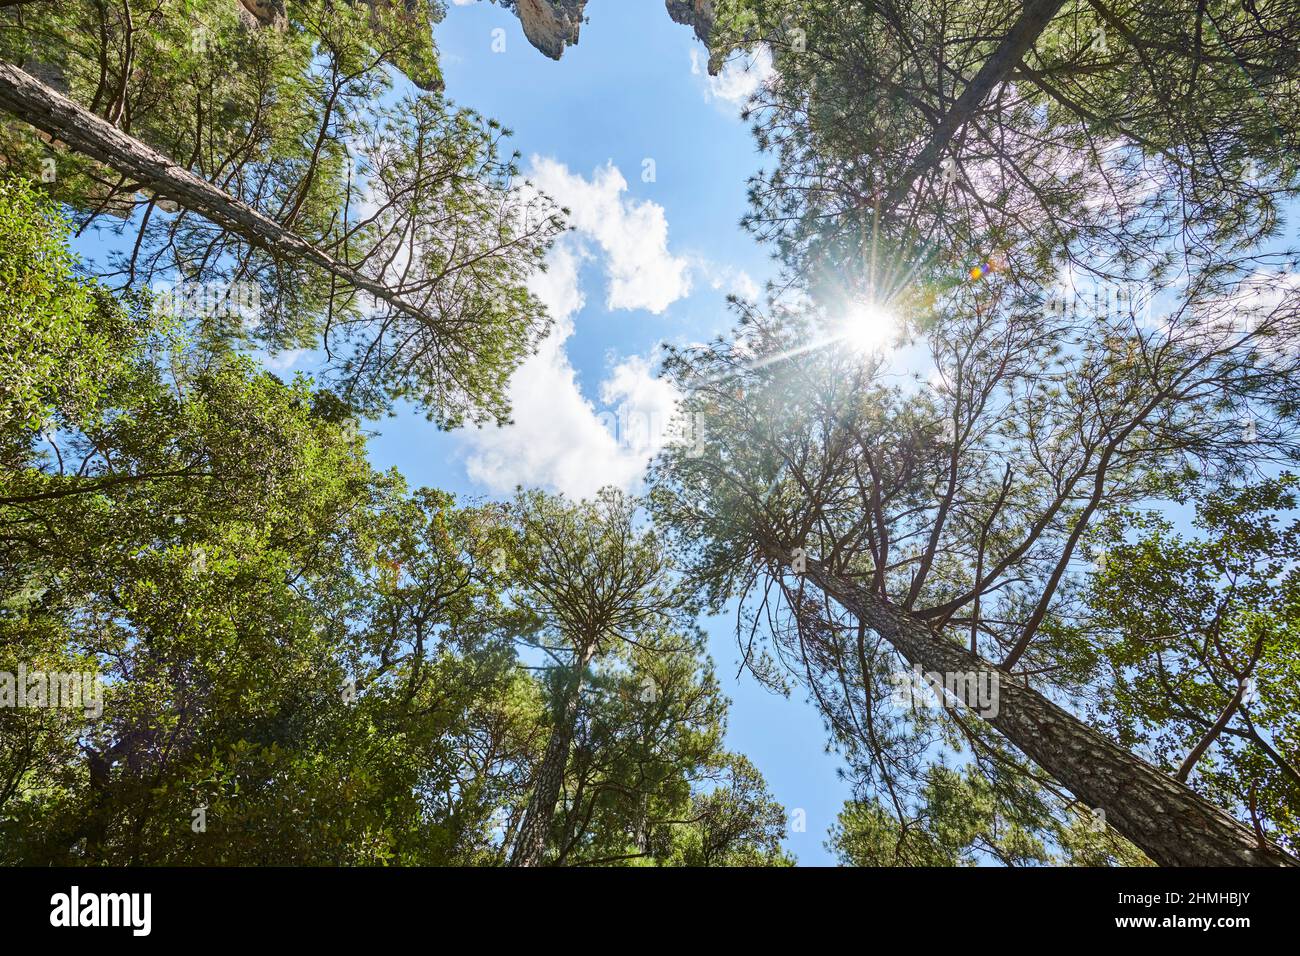 Austrian pine or black pine Landscape (Pinus nigra) against the sky, El Parrizal Beceite, Beceite, Teruel Province, Aragon Autonomous Region, Northern Spain, Spain, Europe Stock Photo